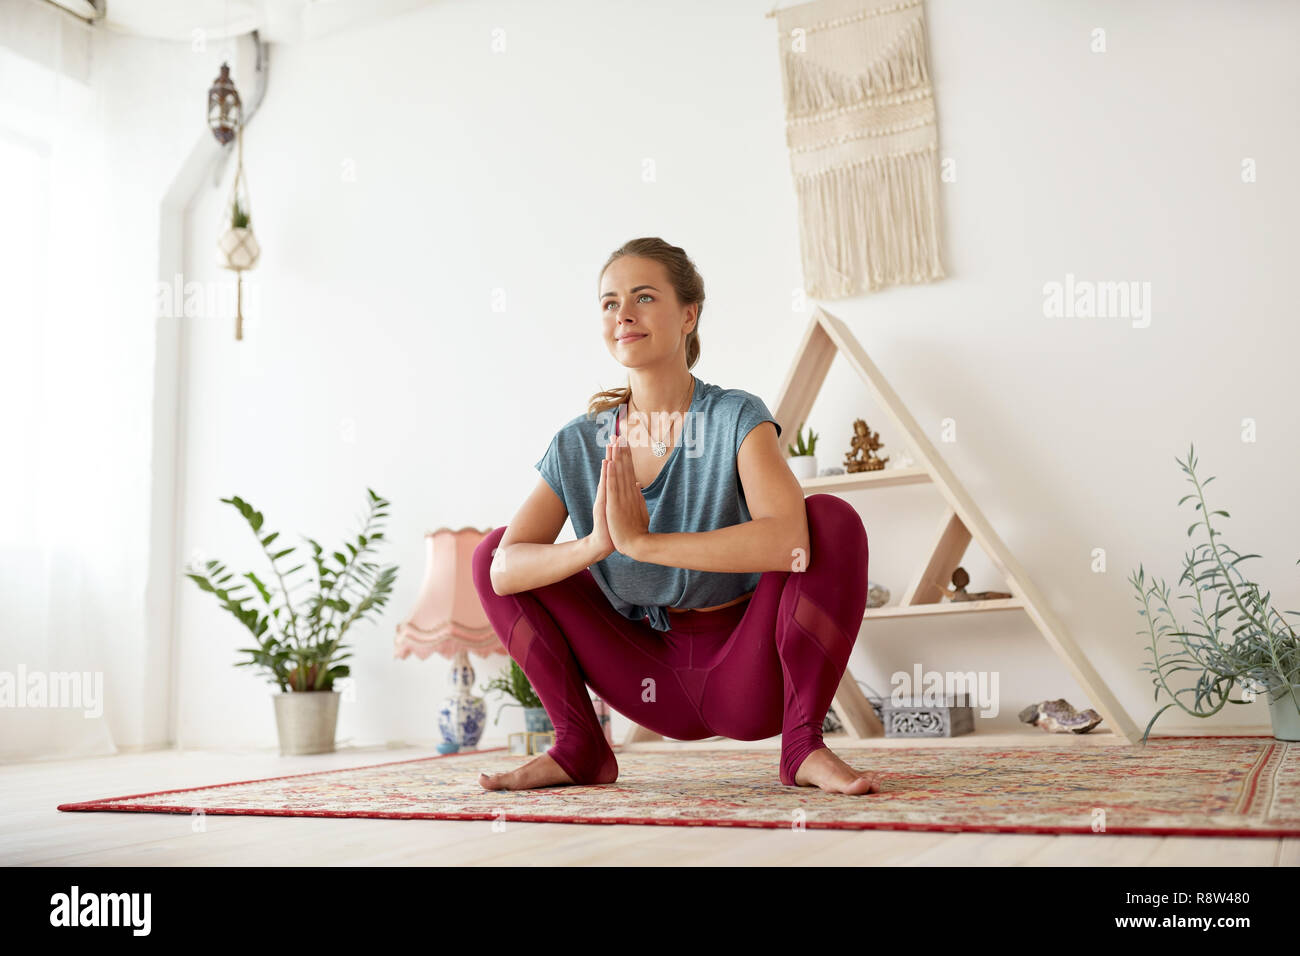 Junge Frau tun Garland bei Yoga Studio darstellen Stockfoto